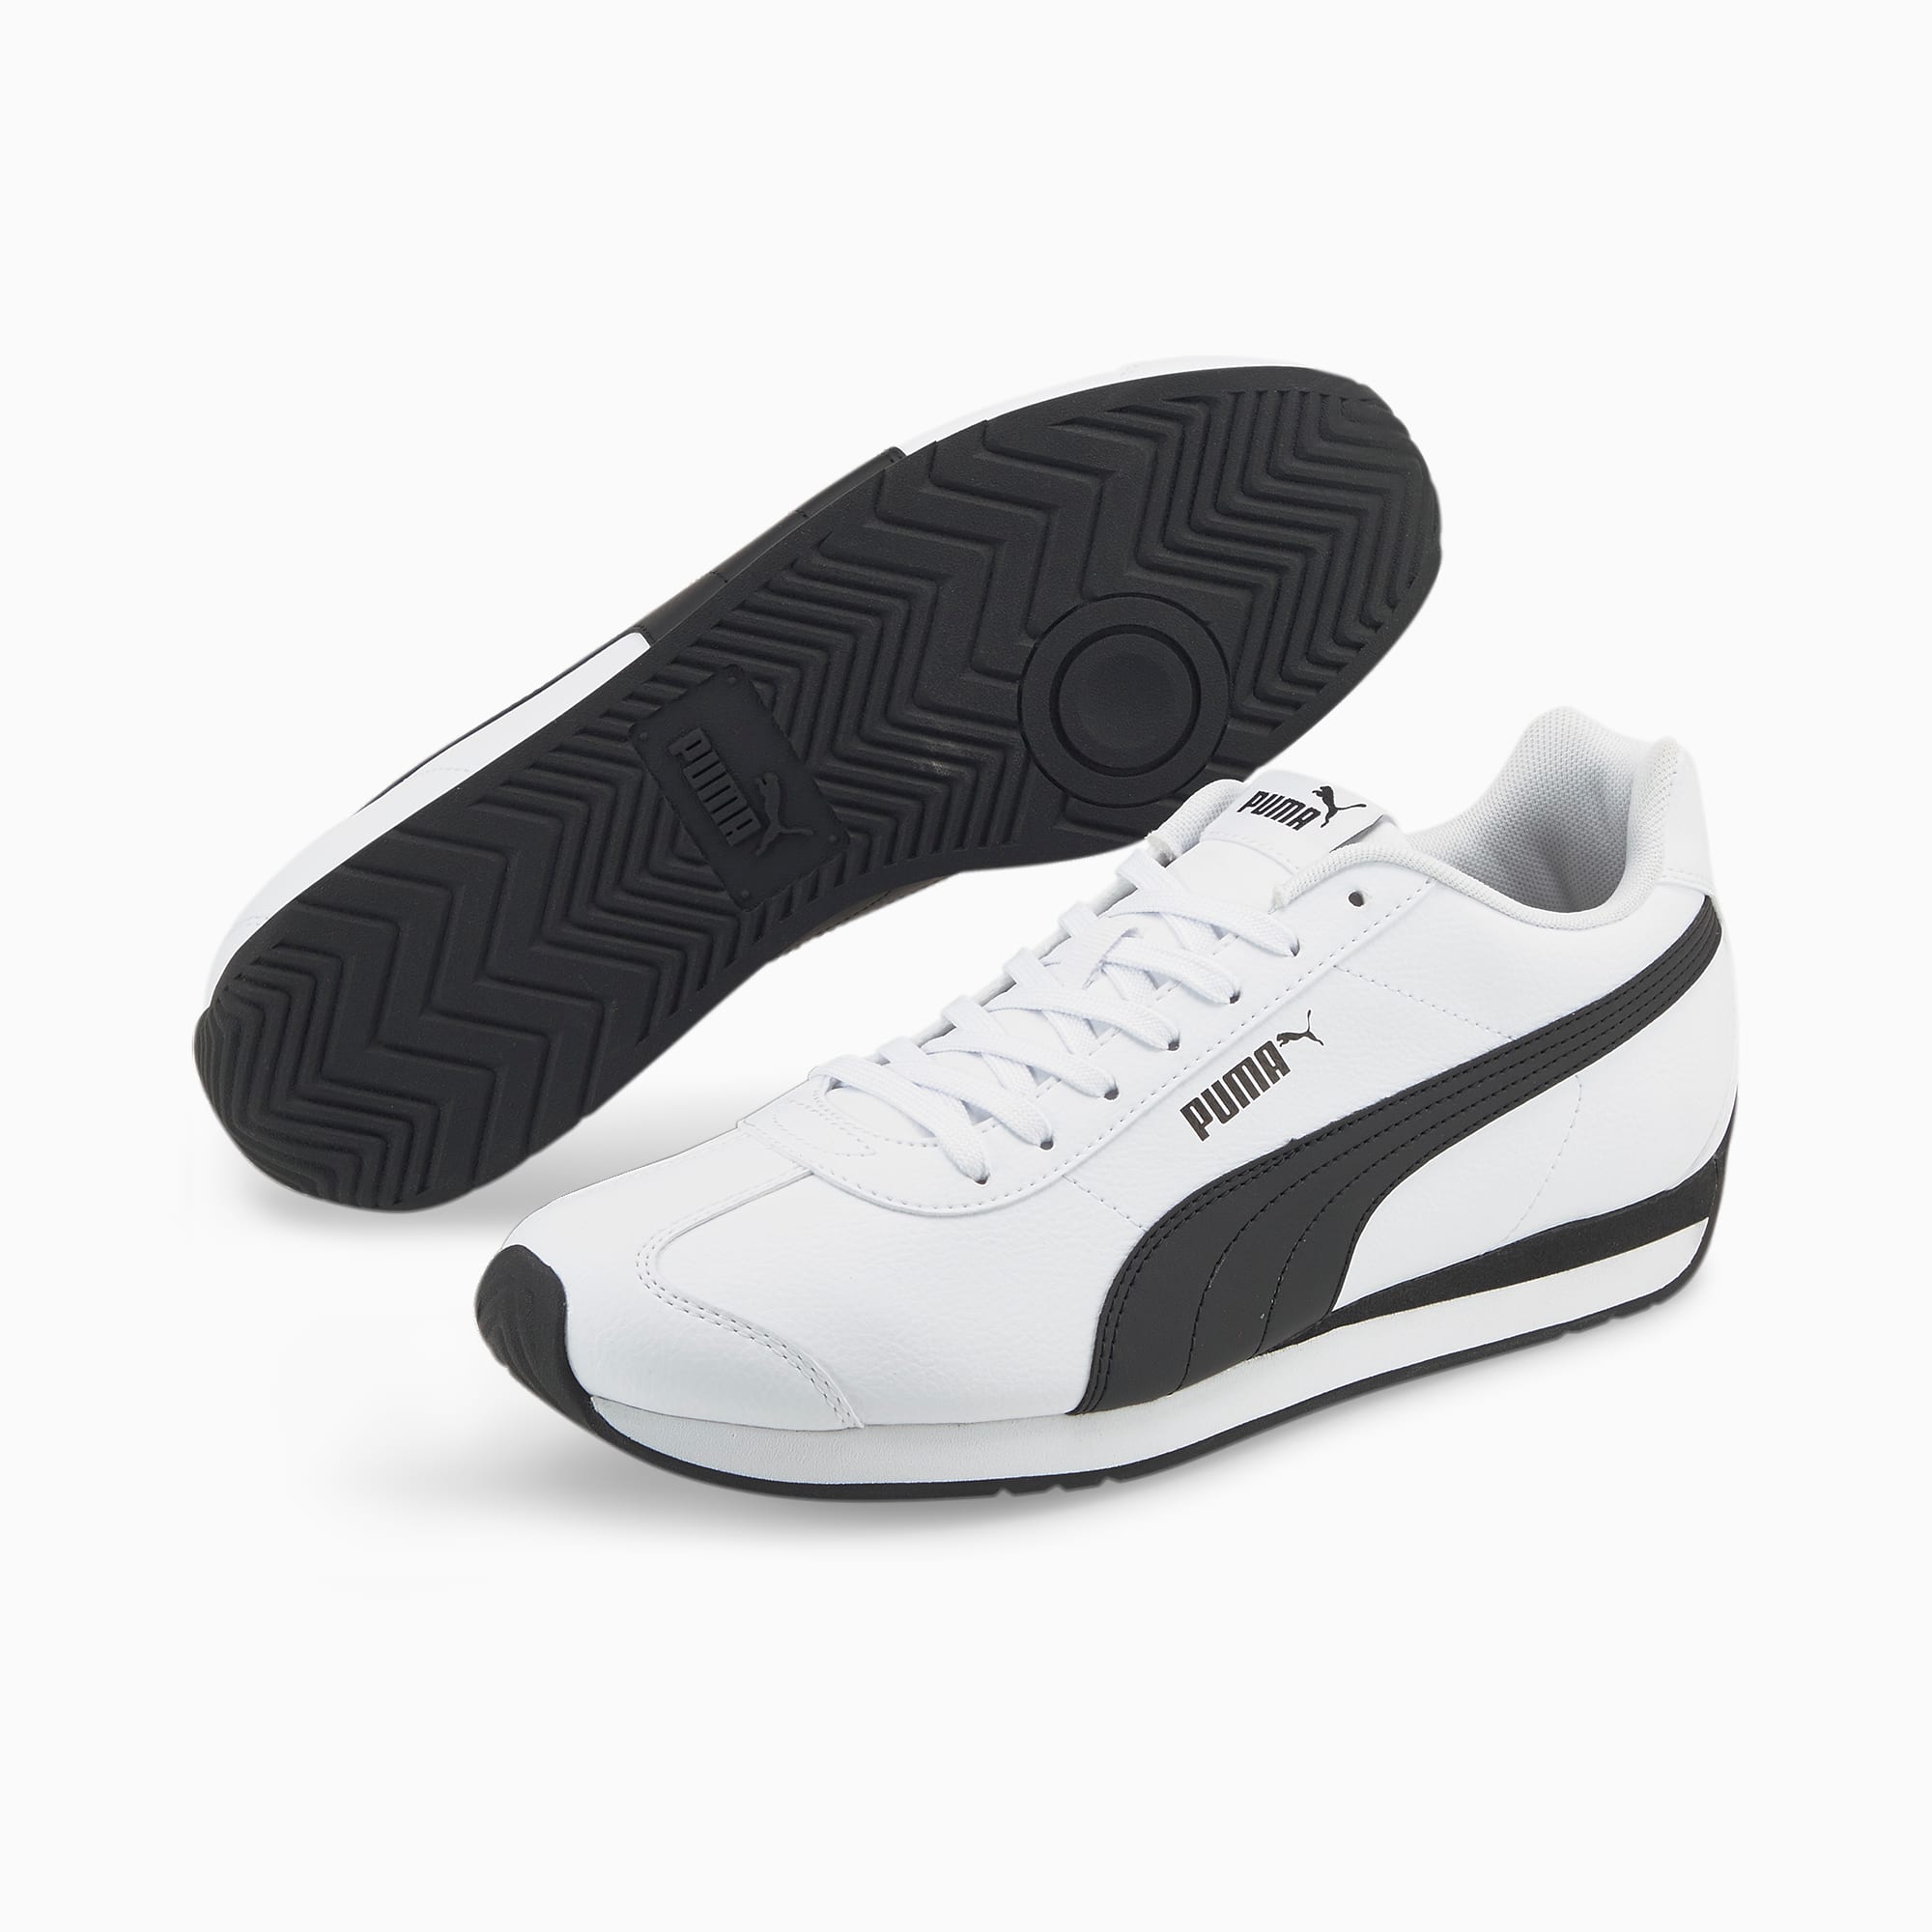 PUMA Turin III Sneakers Schuhe, Schwarz, Größe: 39, Schuhe